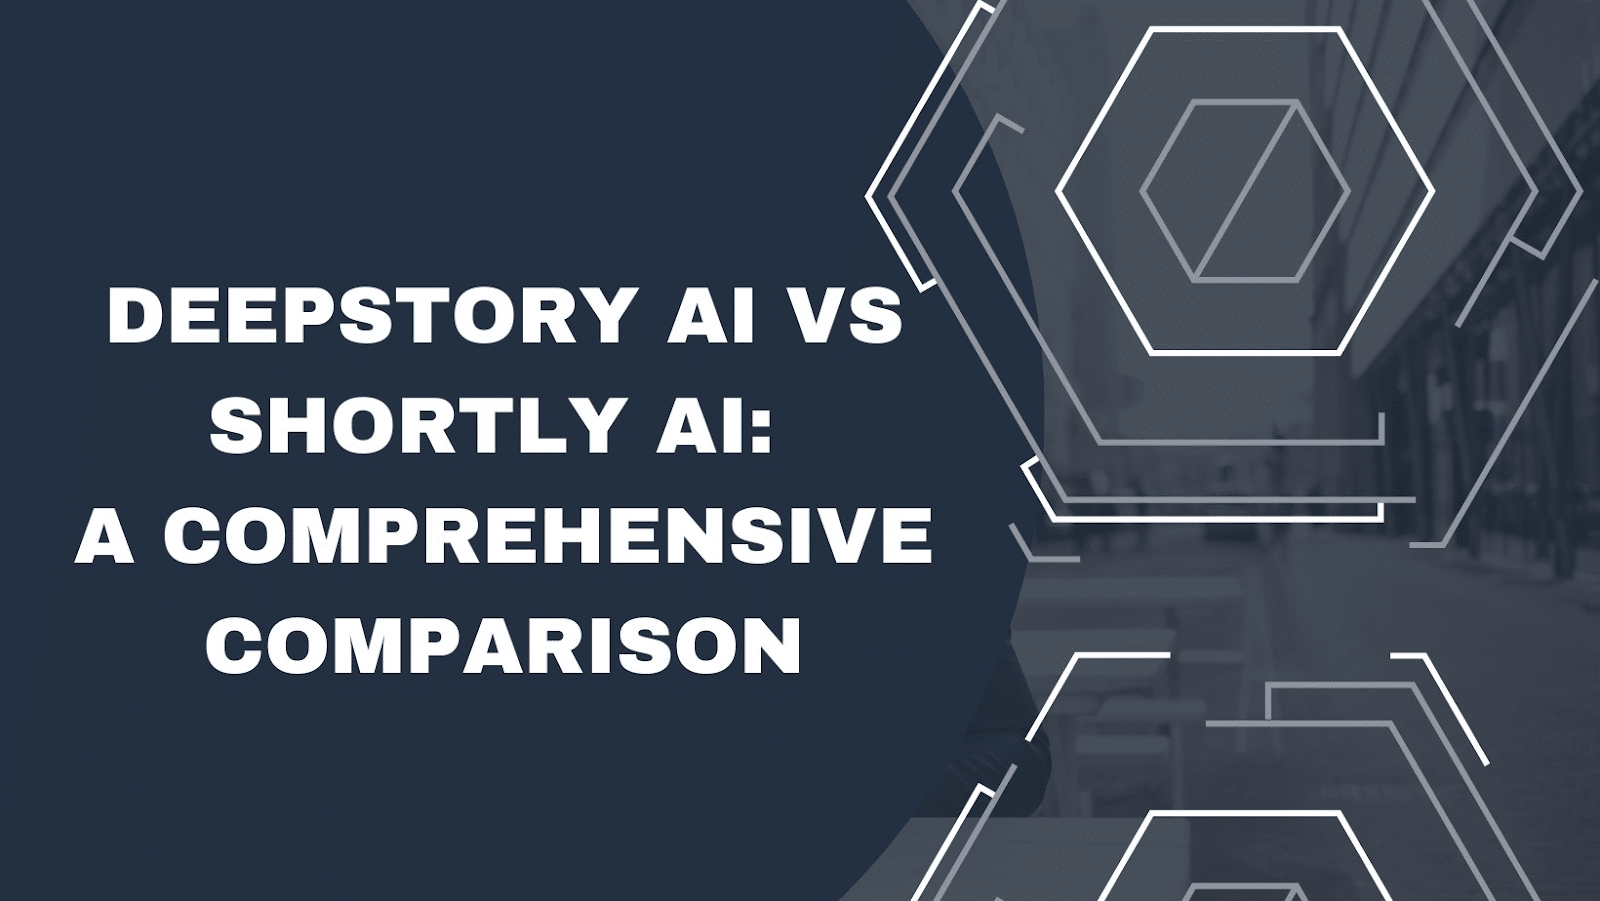 Deepstory AI VS Shortly AI comprehensive comparison